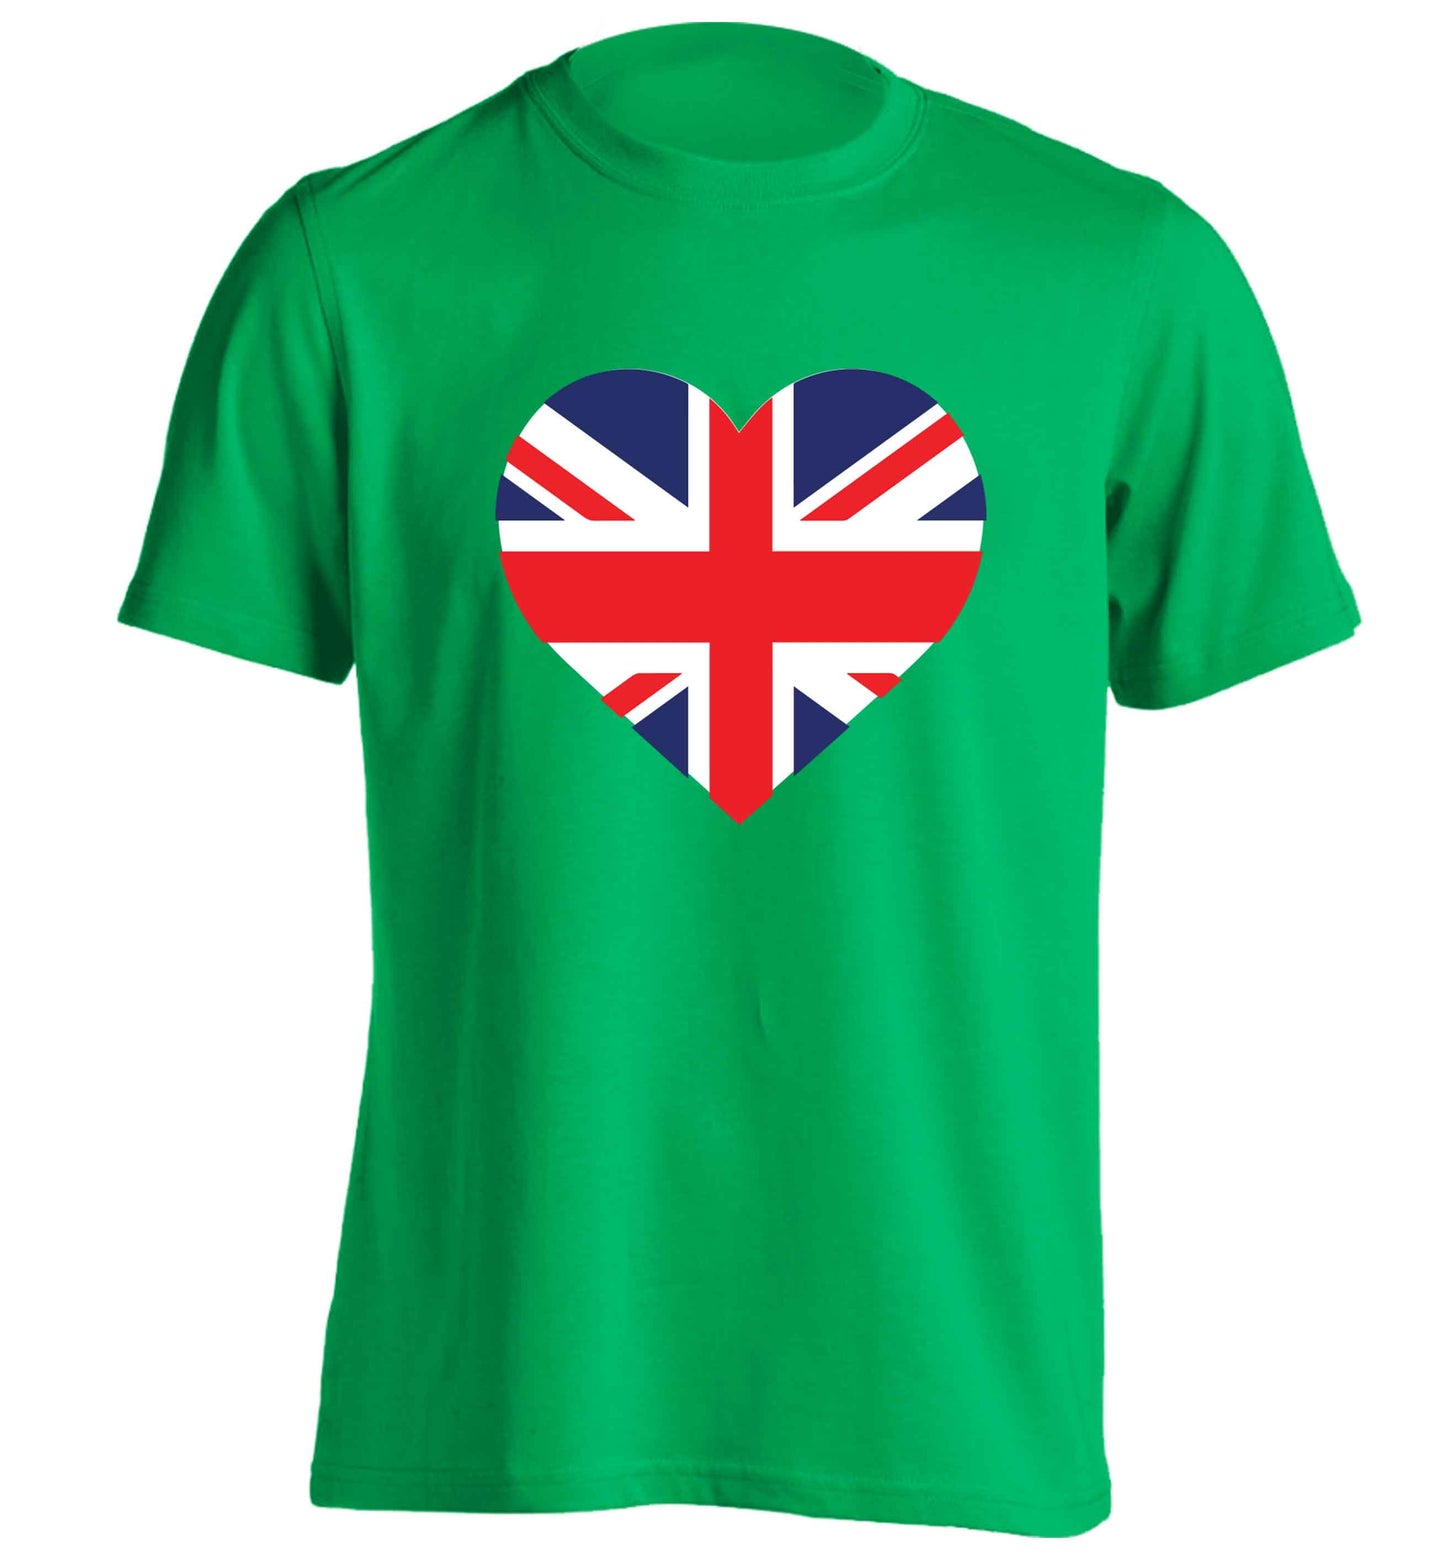 Union Jack Heart adults unisex green Tshirt 2XL